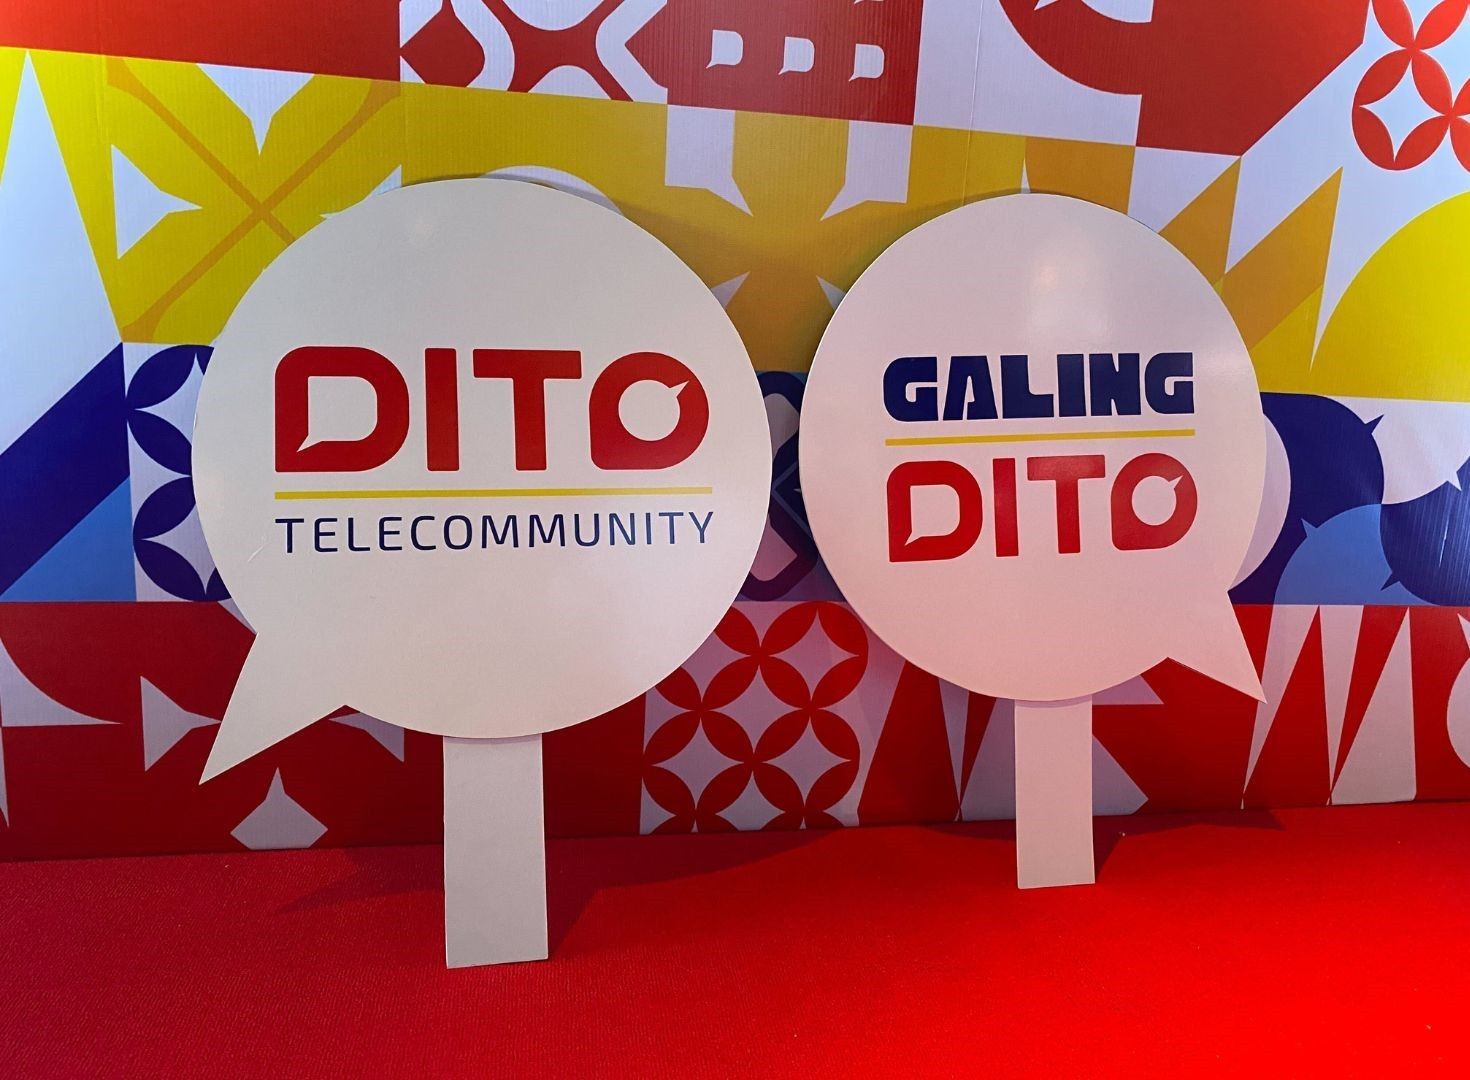 DITO Telecommunity akan meluncurkan kampanye digital untuk Hari Kemerdekaan ke-124 merayakan bakat lokal